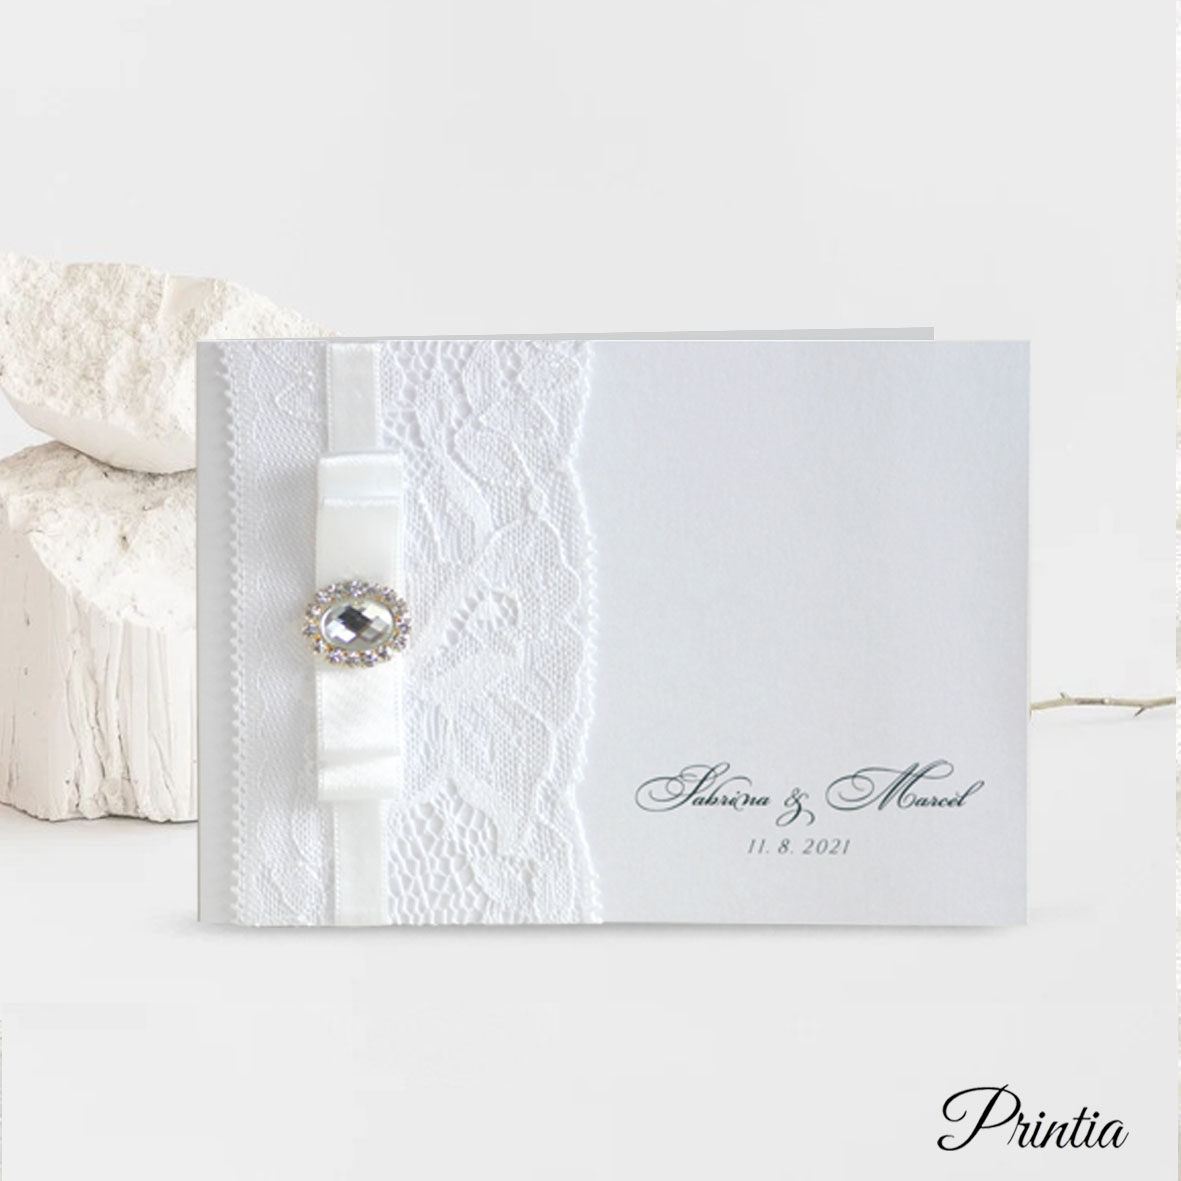 Lace wedding invitations